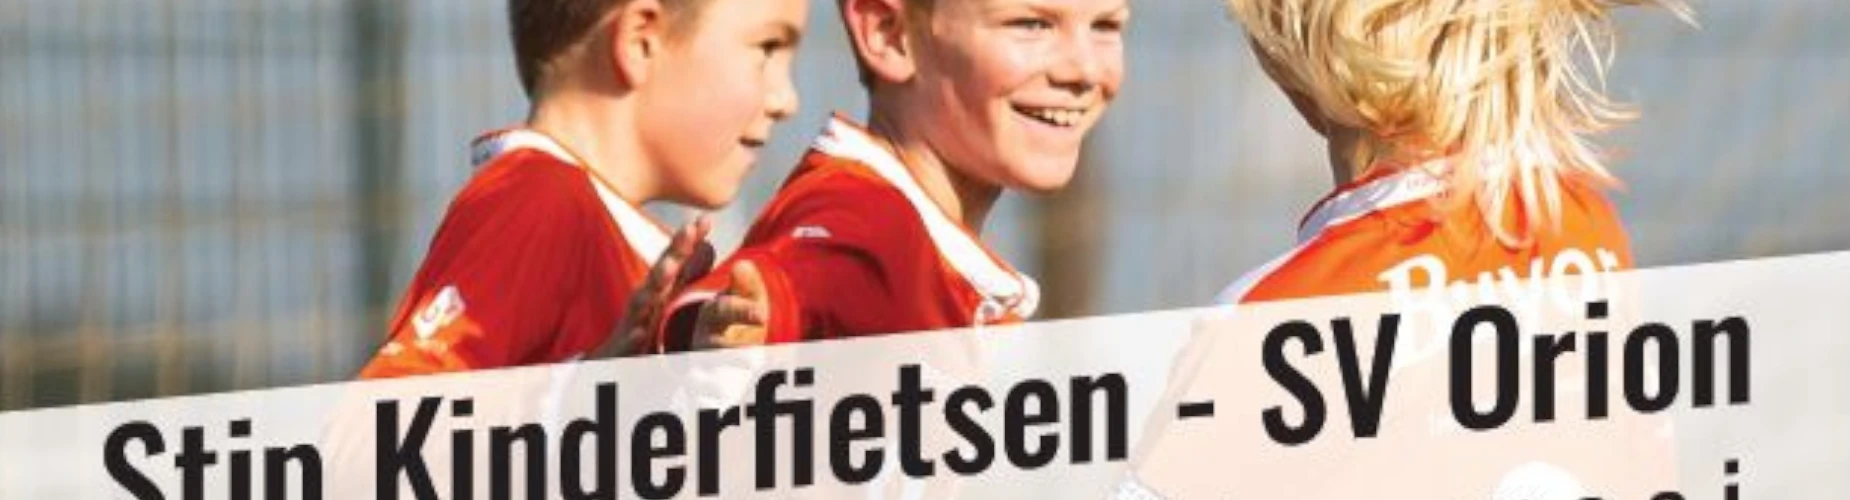 Banner - Stip Kinderfietsen Jeugdtoernooi - SV Orion - Nijmegen